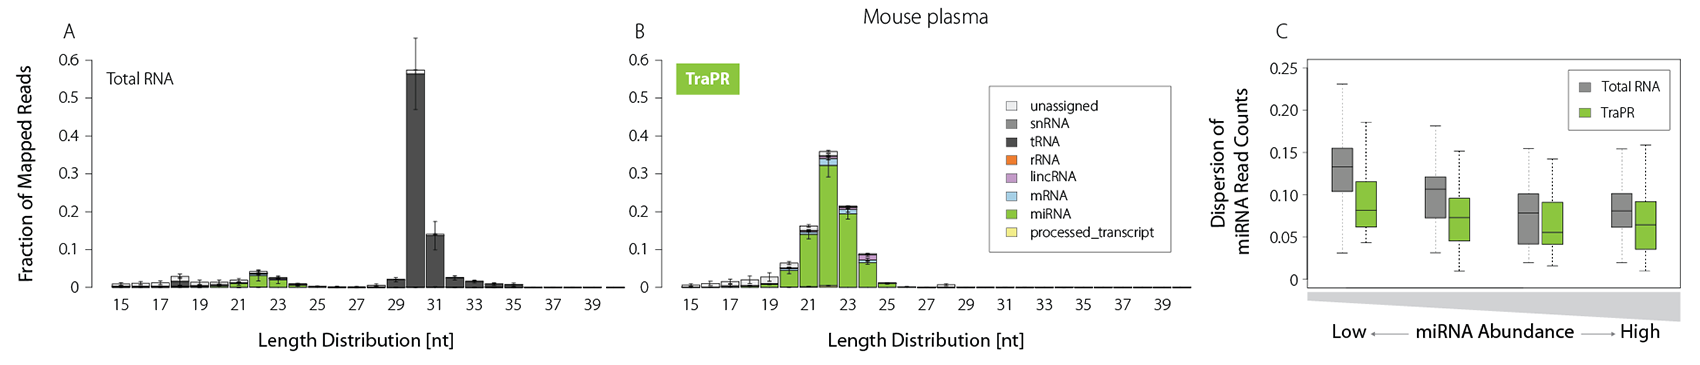 044_TraPR-_Length-distribution-and-dispersion-mouse-plasma_V0101.png